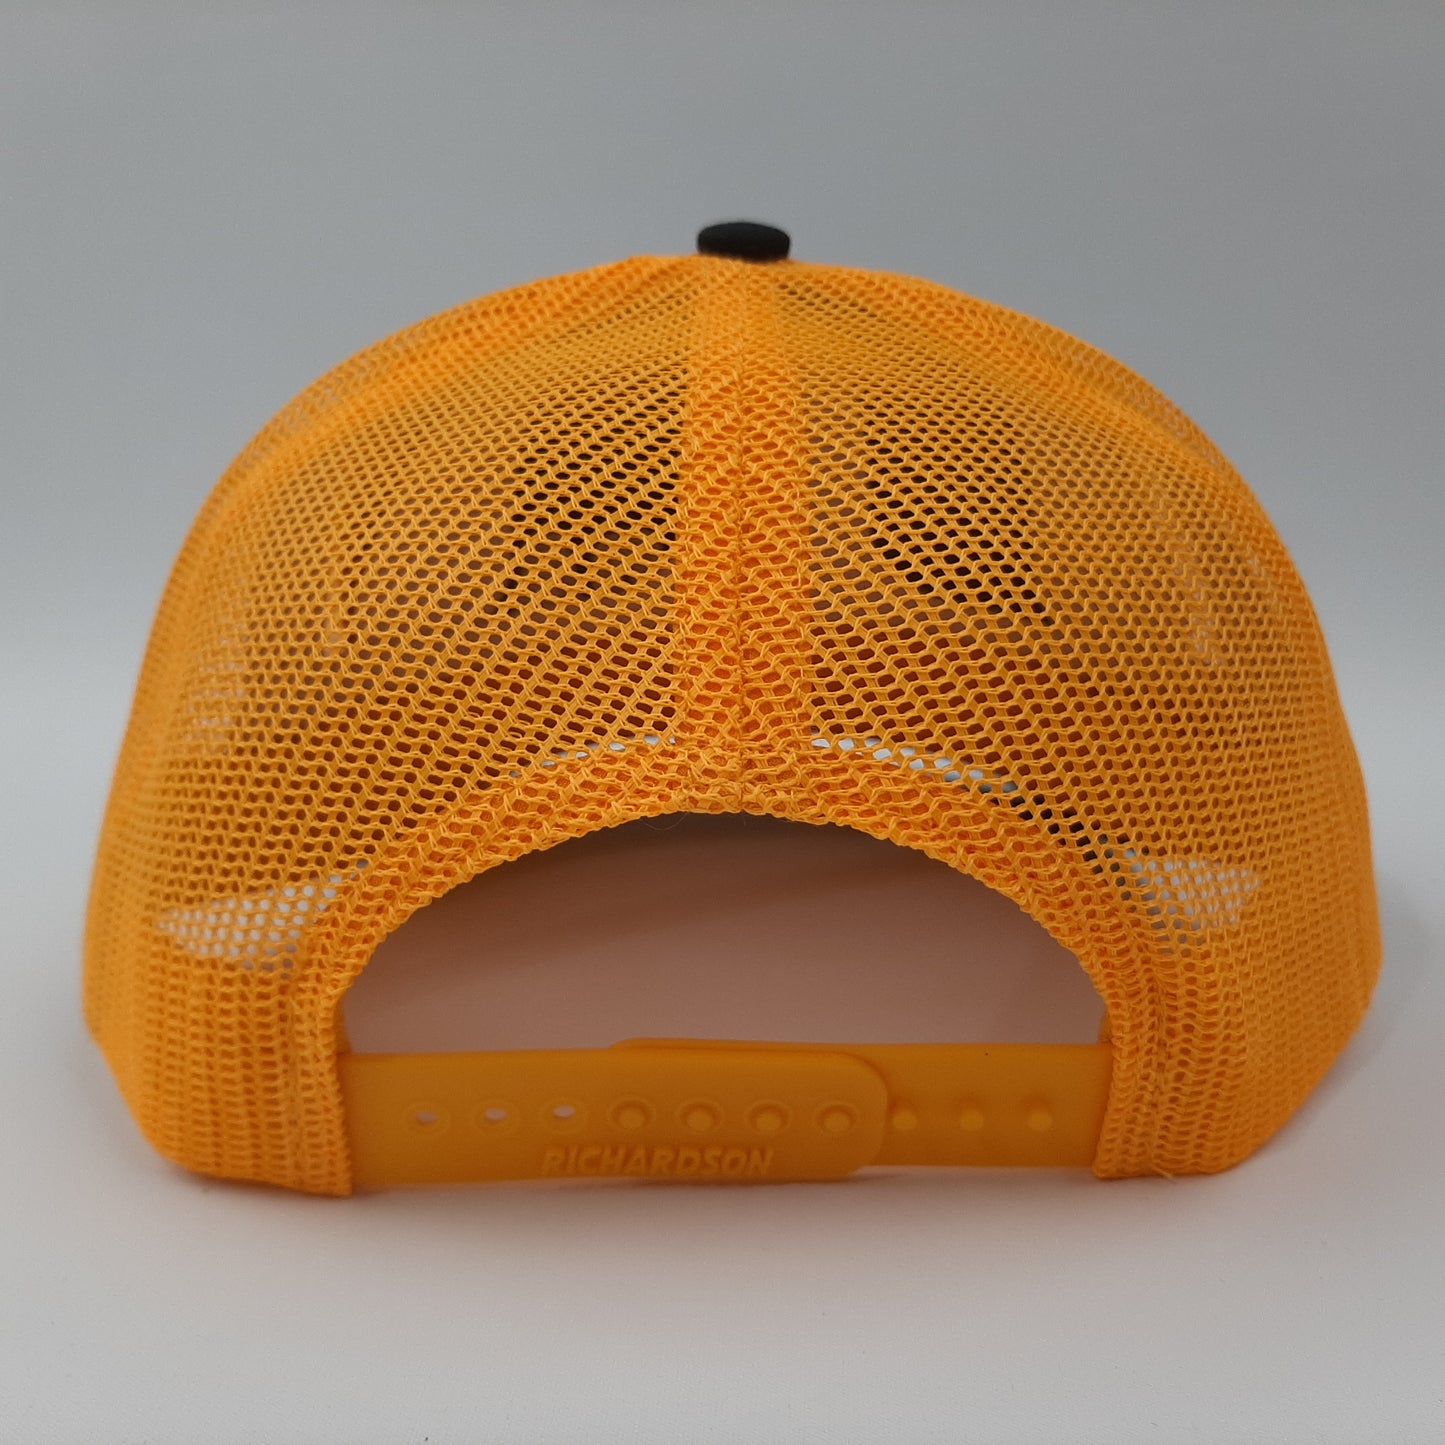 Richardson 112 CAT Caterpillar Mesh Snapback Cap Hat Tri-Color